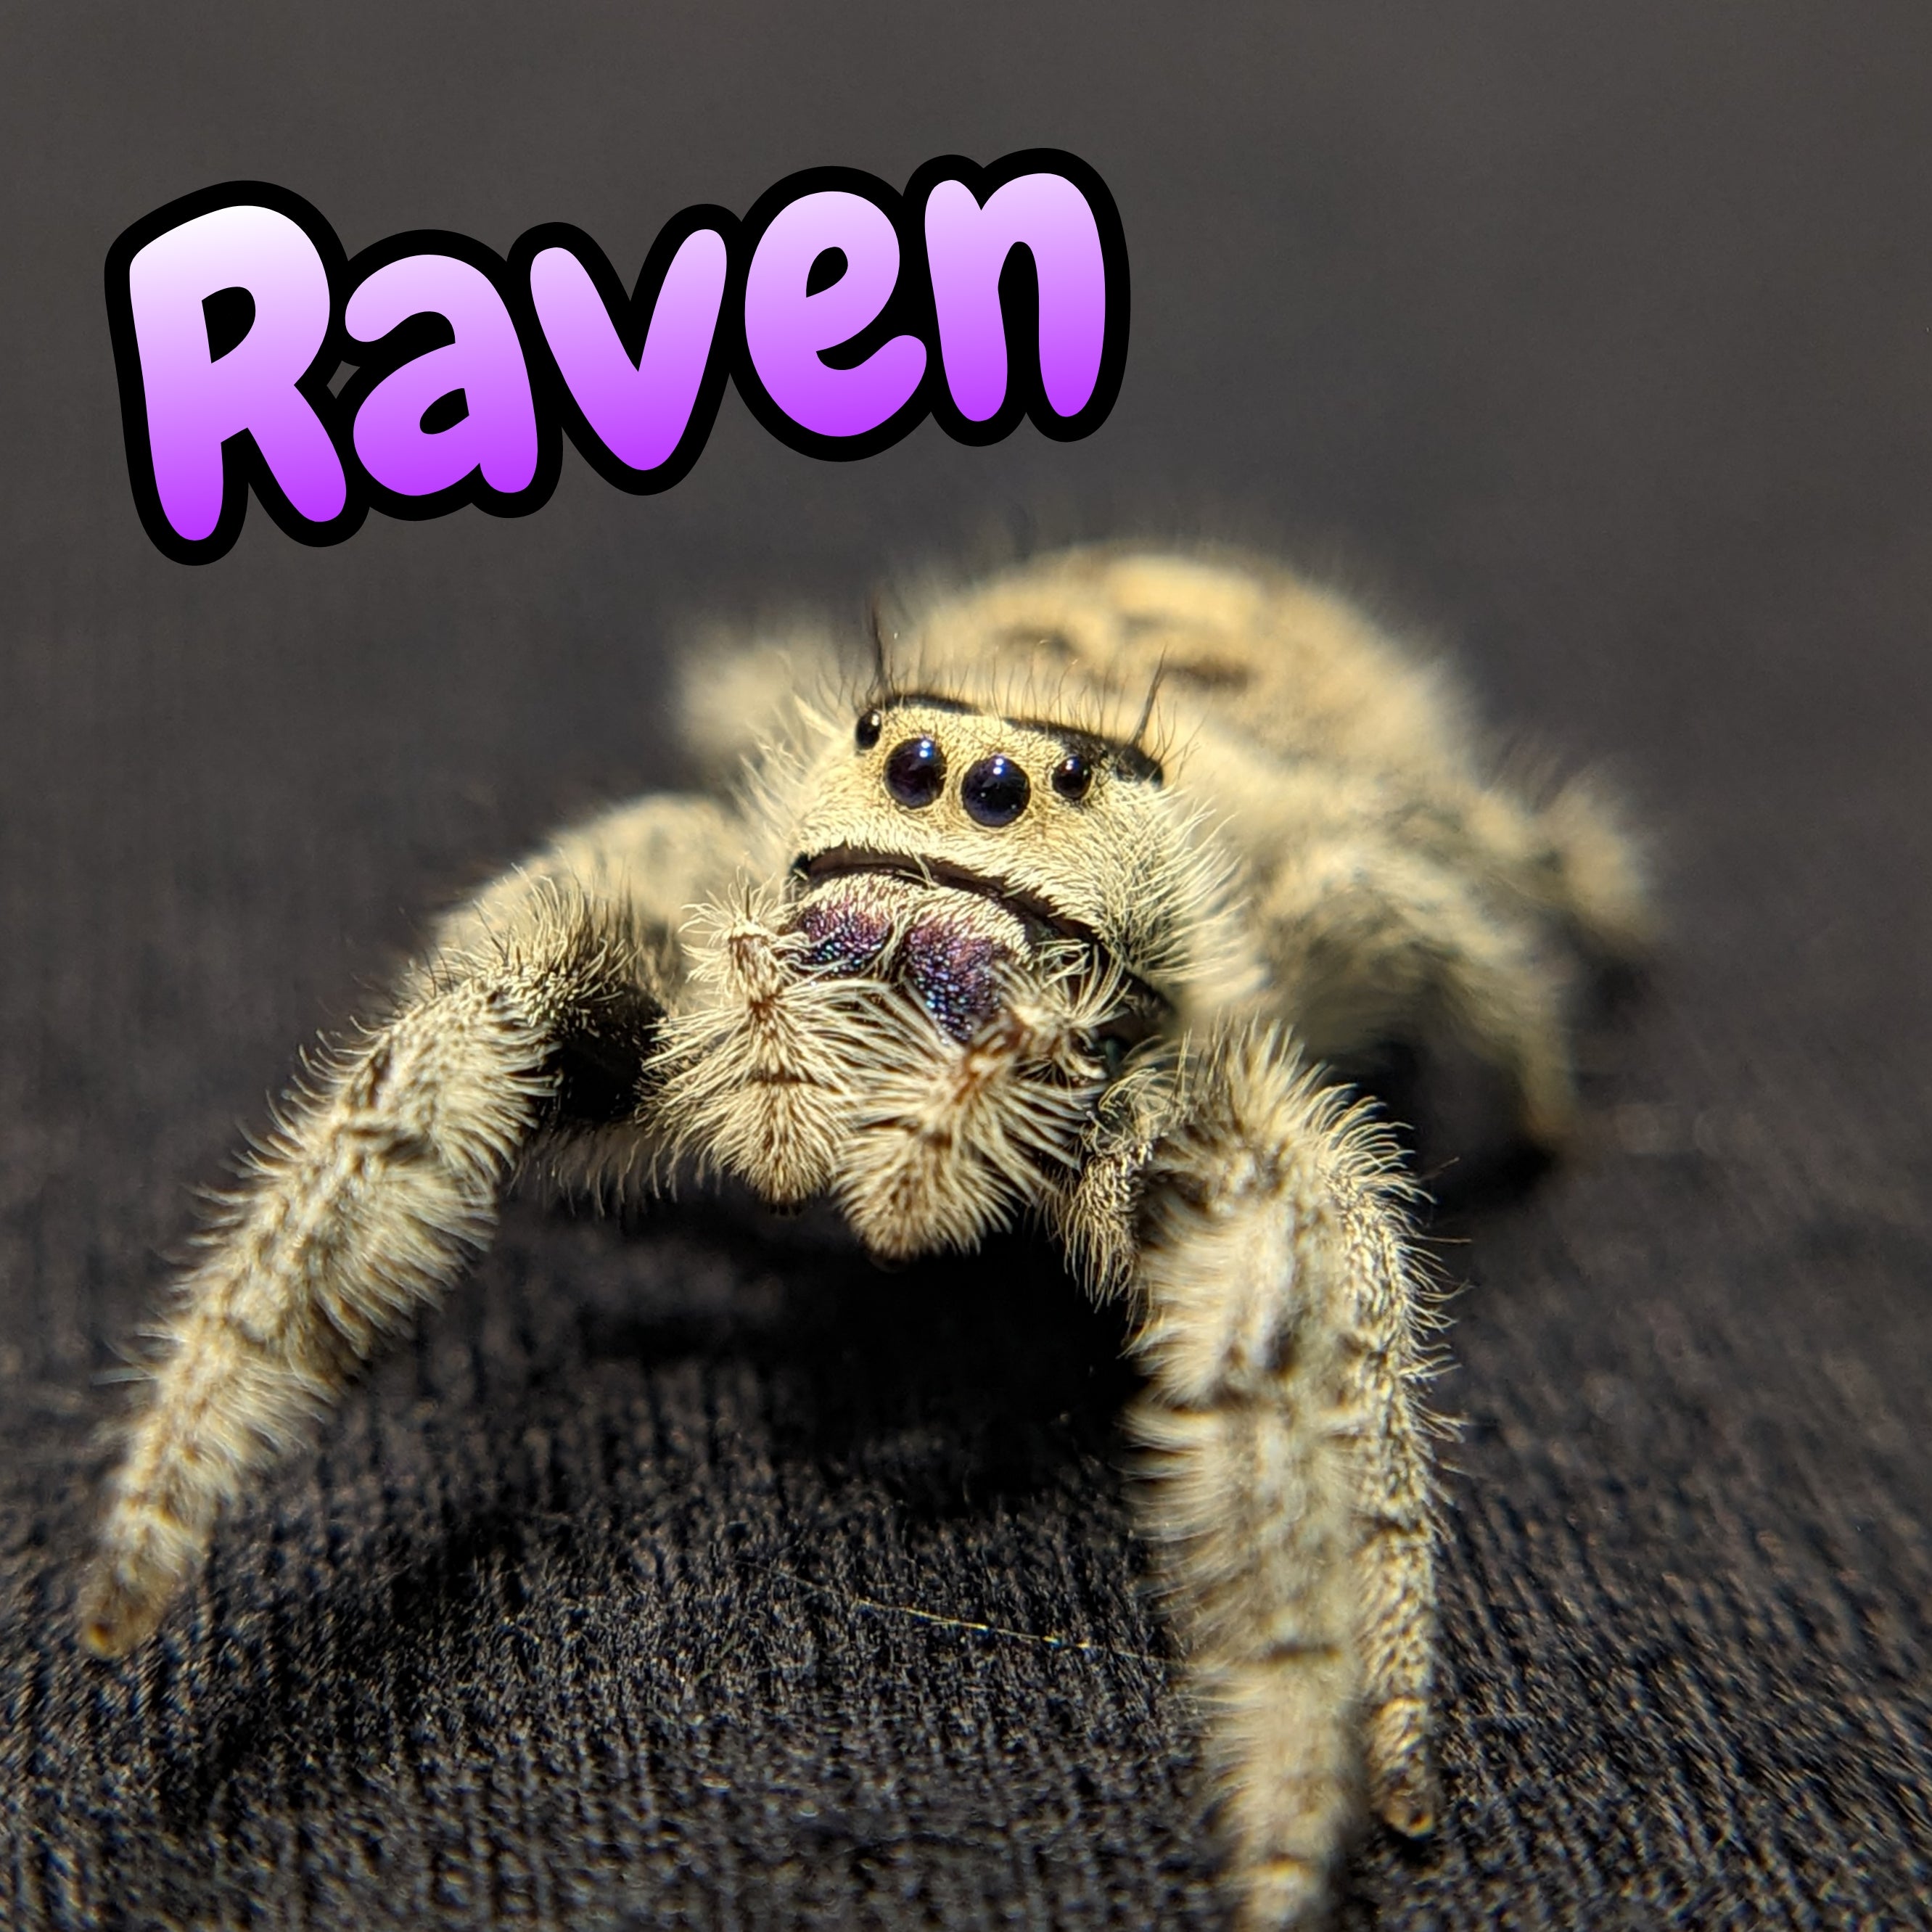 Regal Jumping Spider "Raven"